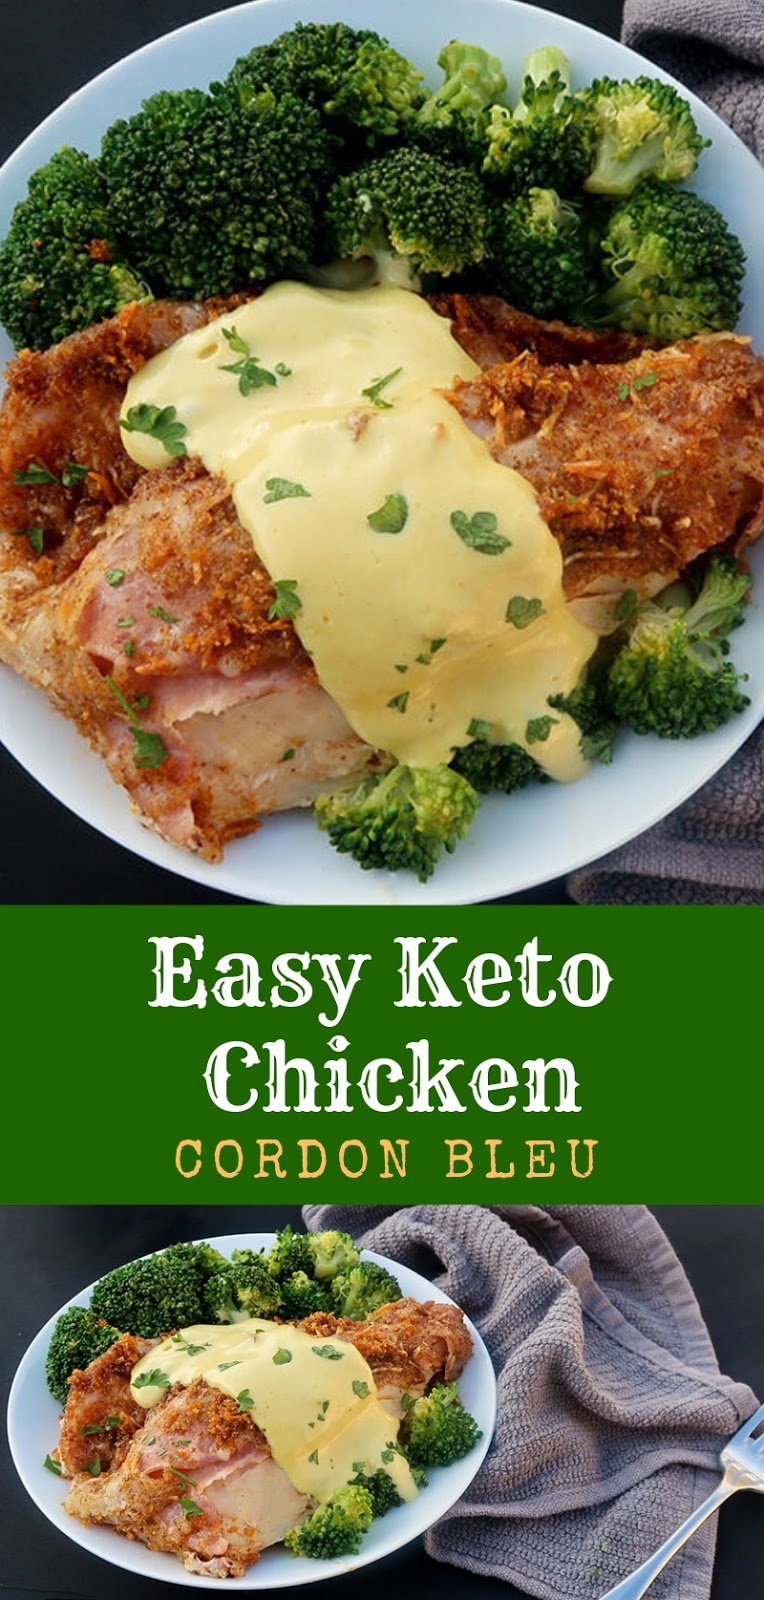 Easy Keto Chicken Cordon Bleu - Nails Magazine